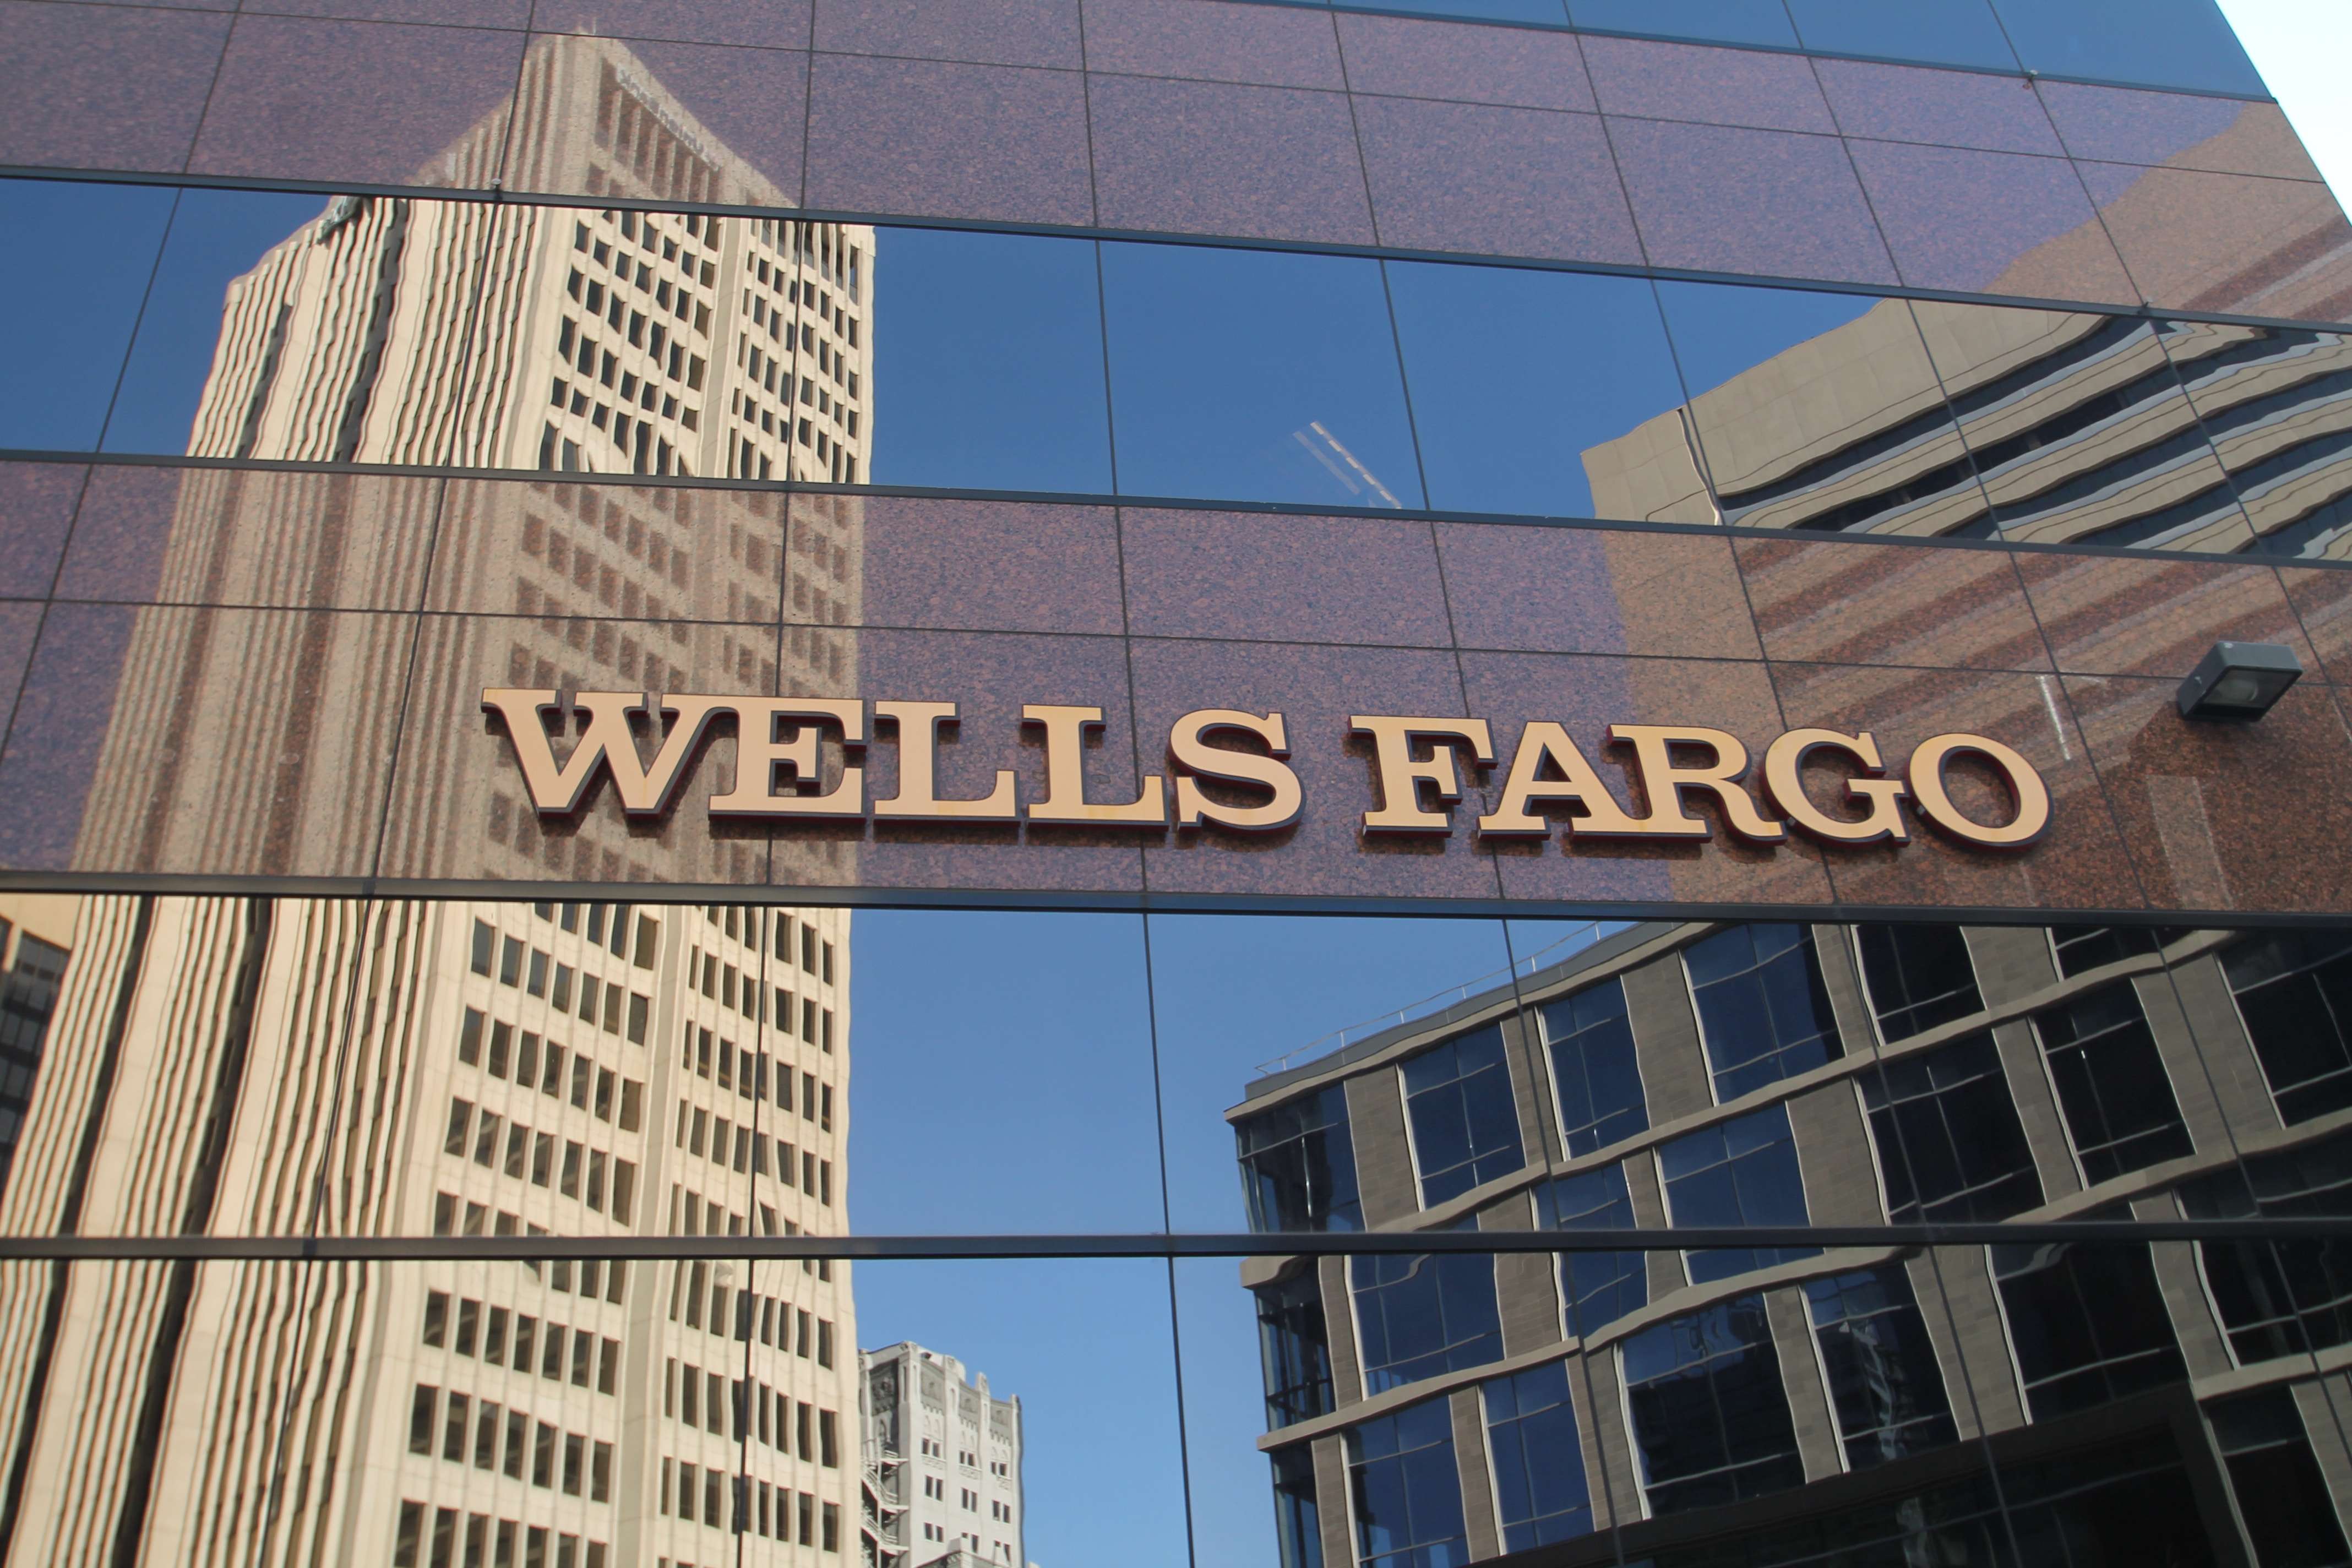 Wells Fargo name on building, Savings Accounts